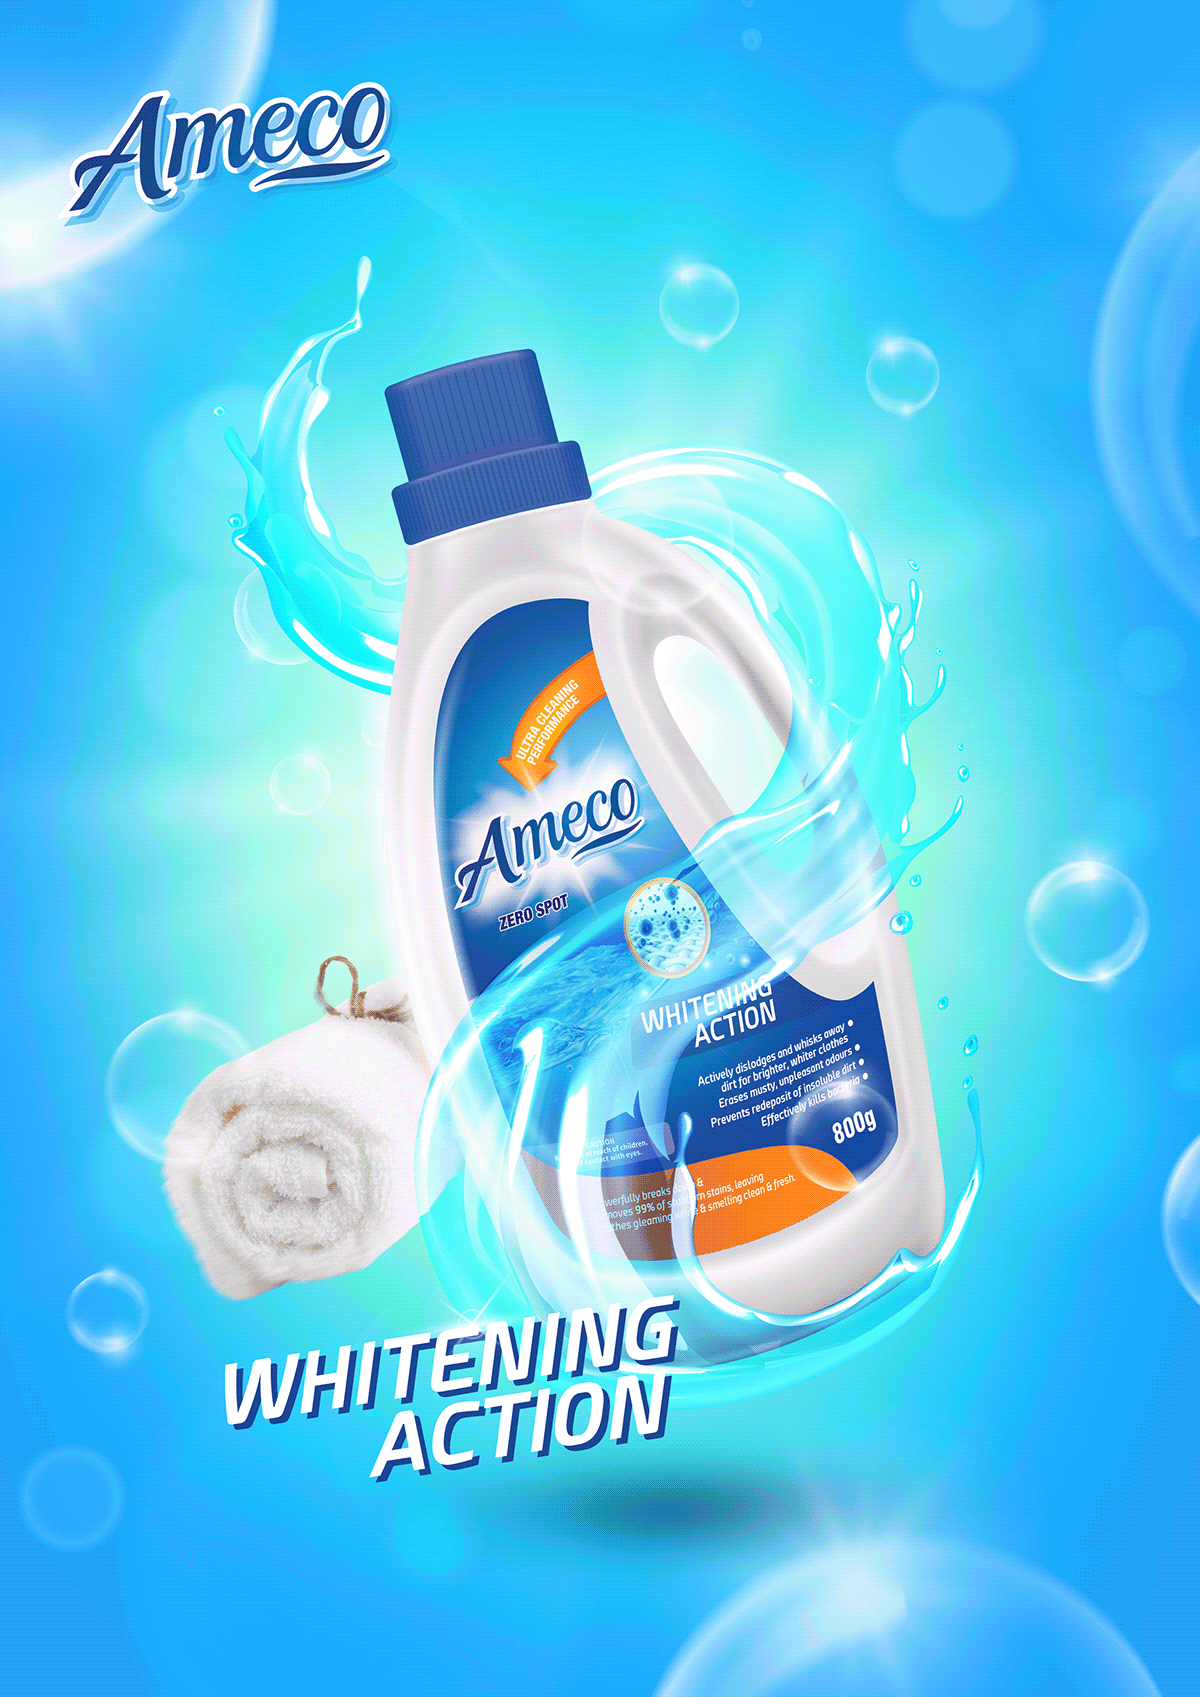 ads Advertising  detergent Keyvisual kv laundry